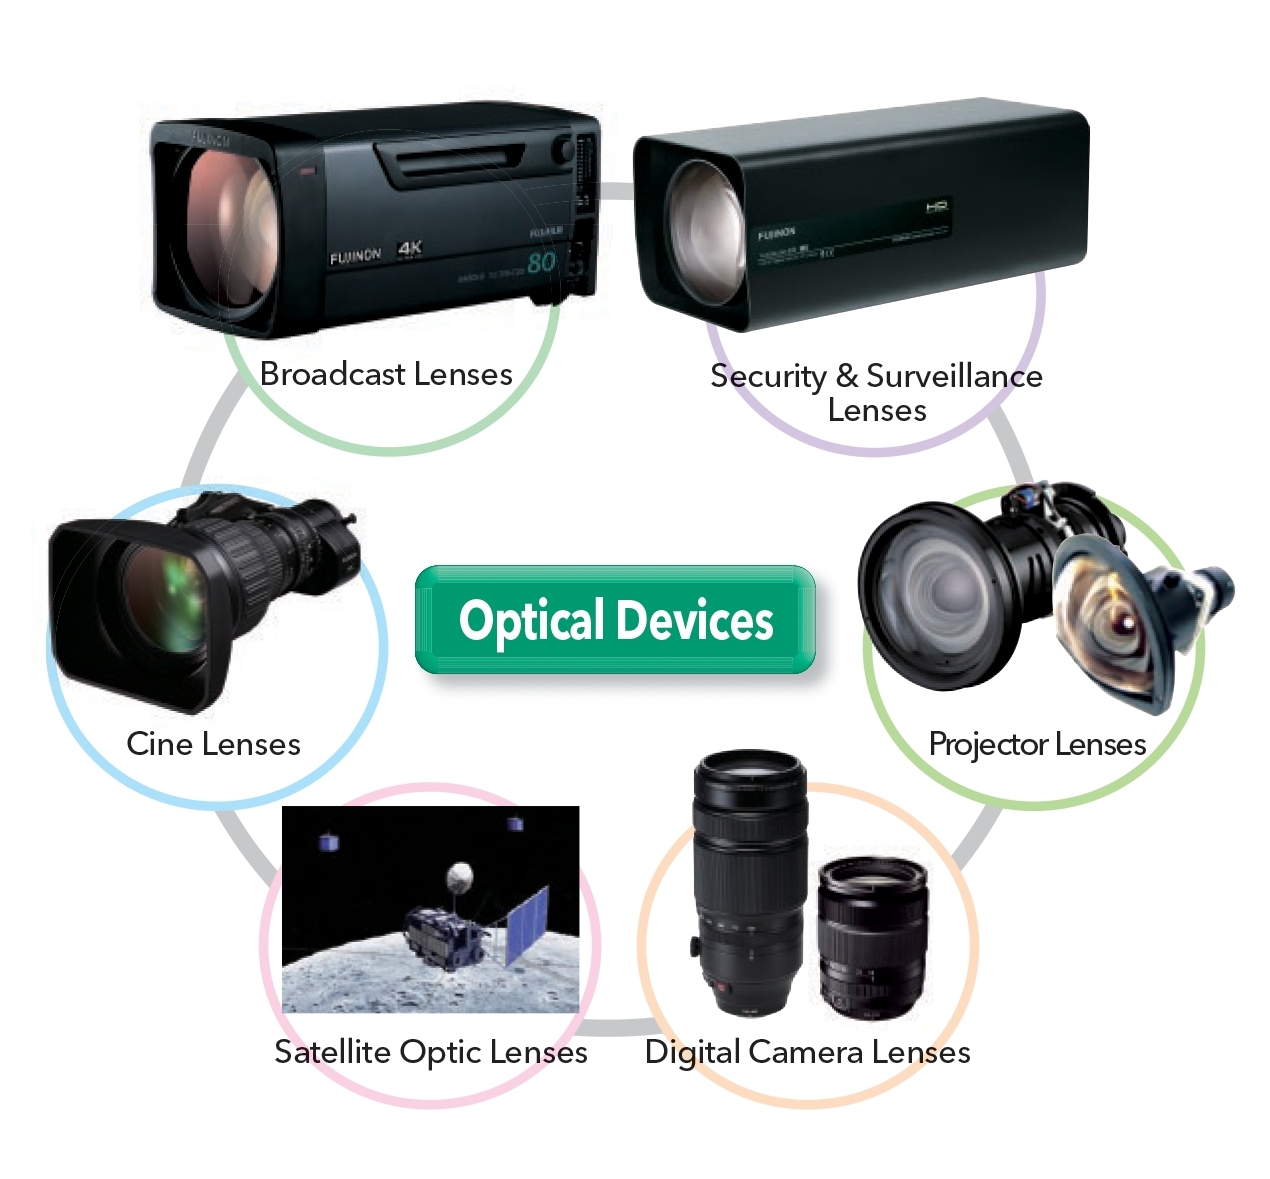 FUJINON Optical Devices